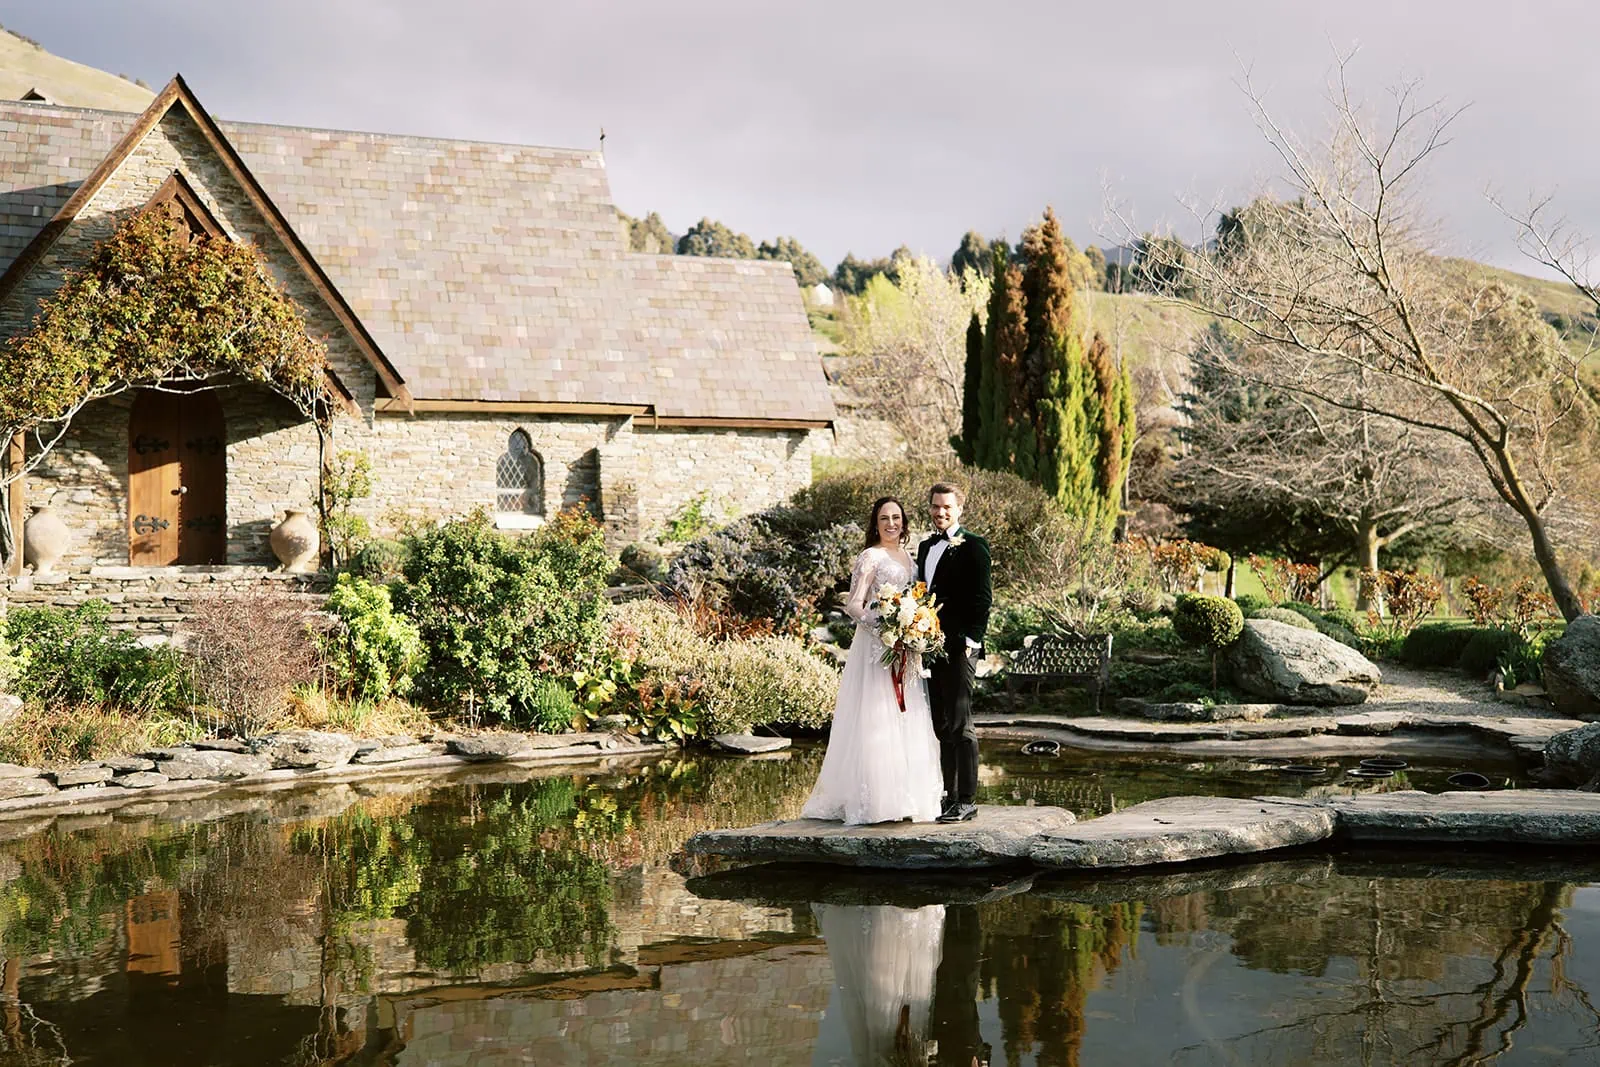 Queenstown Wedding Photographer Nat & Tim's Queenstown elopement wedding captured at Deer Park Heights, with the picturesque backdrop of a pond.